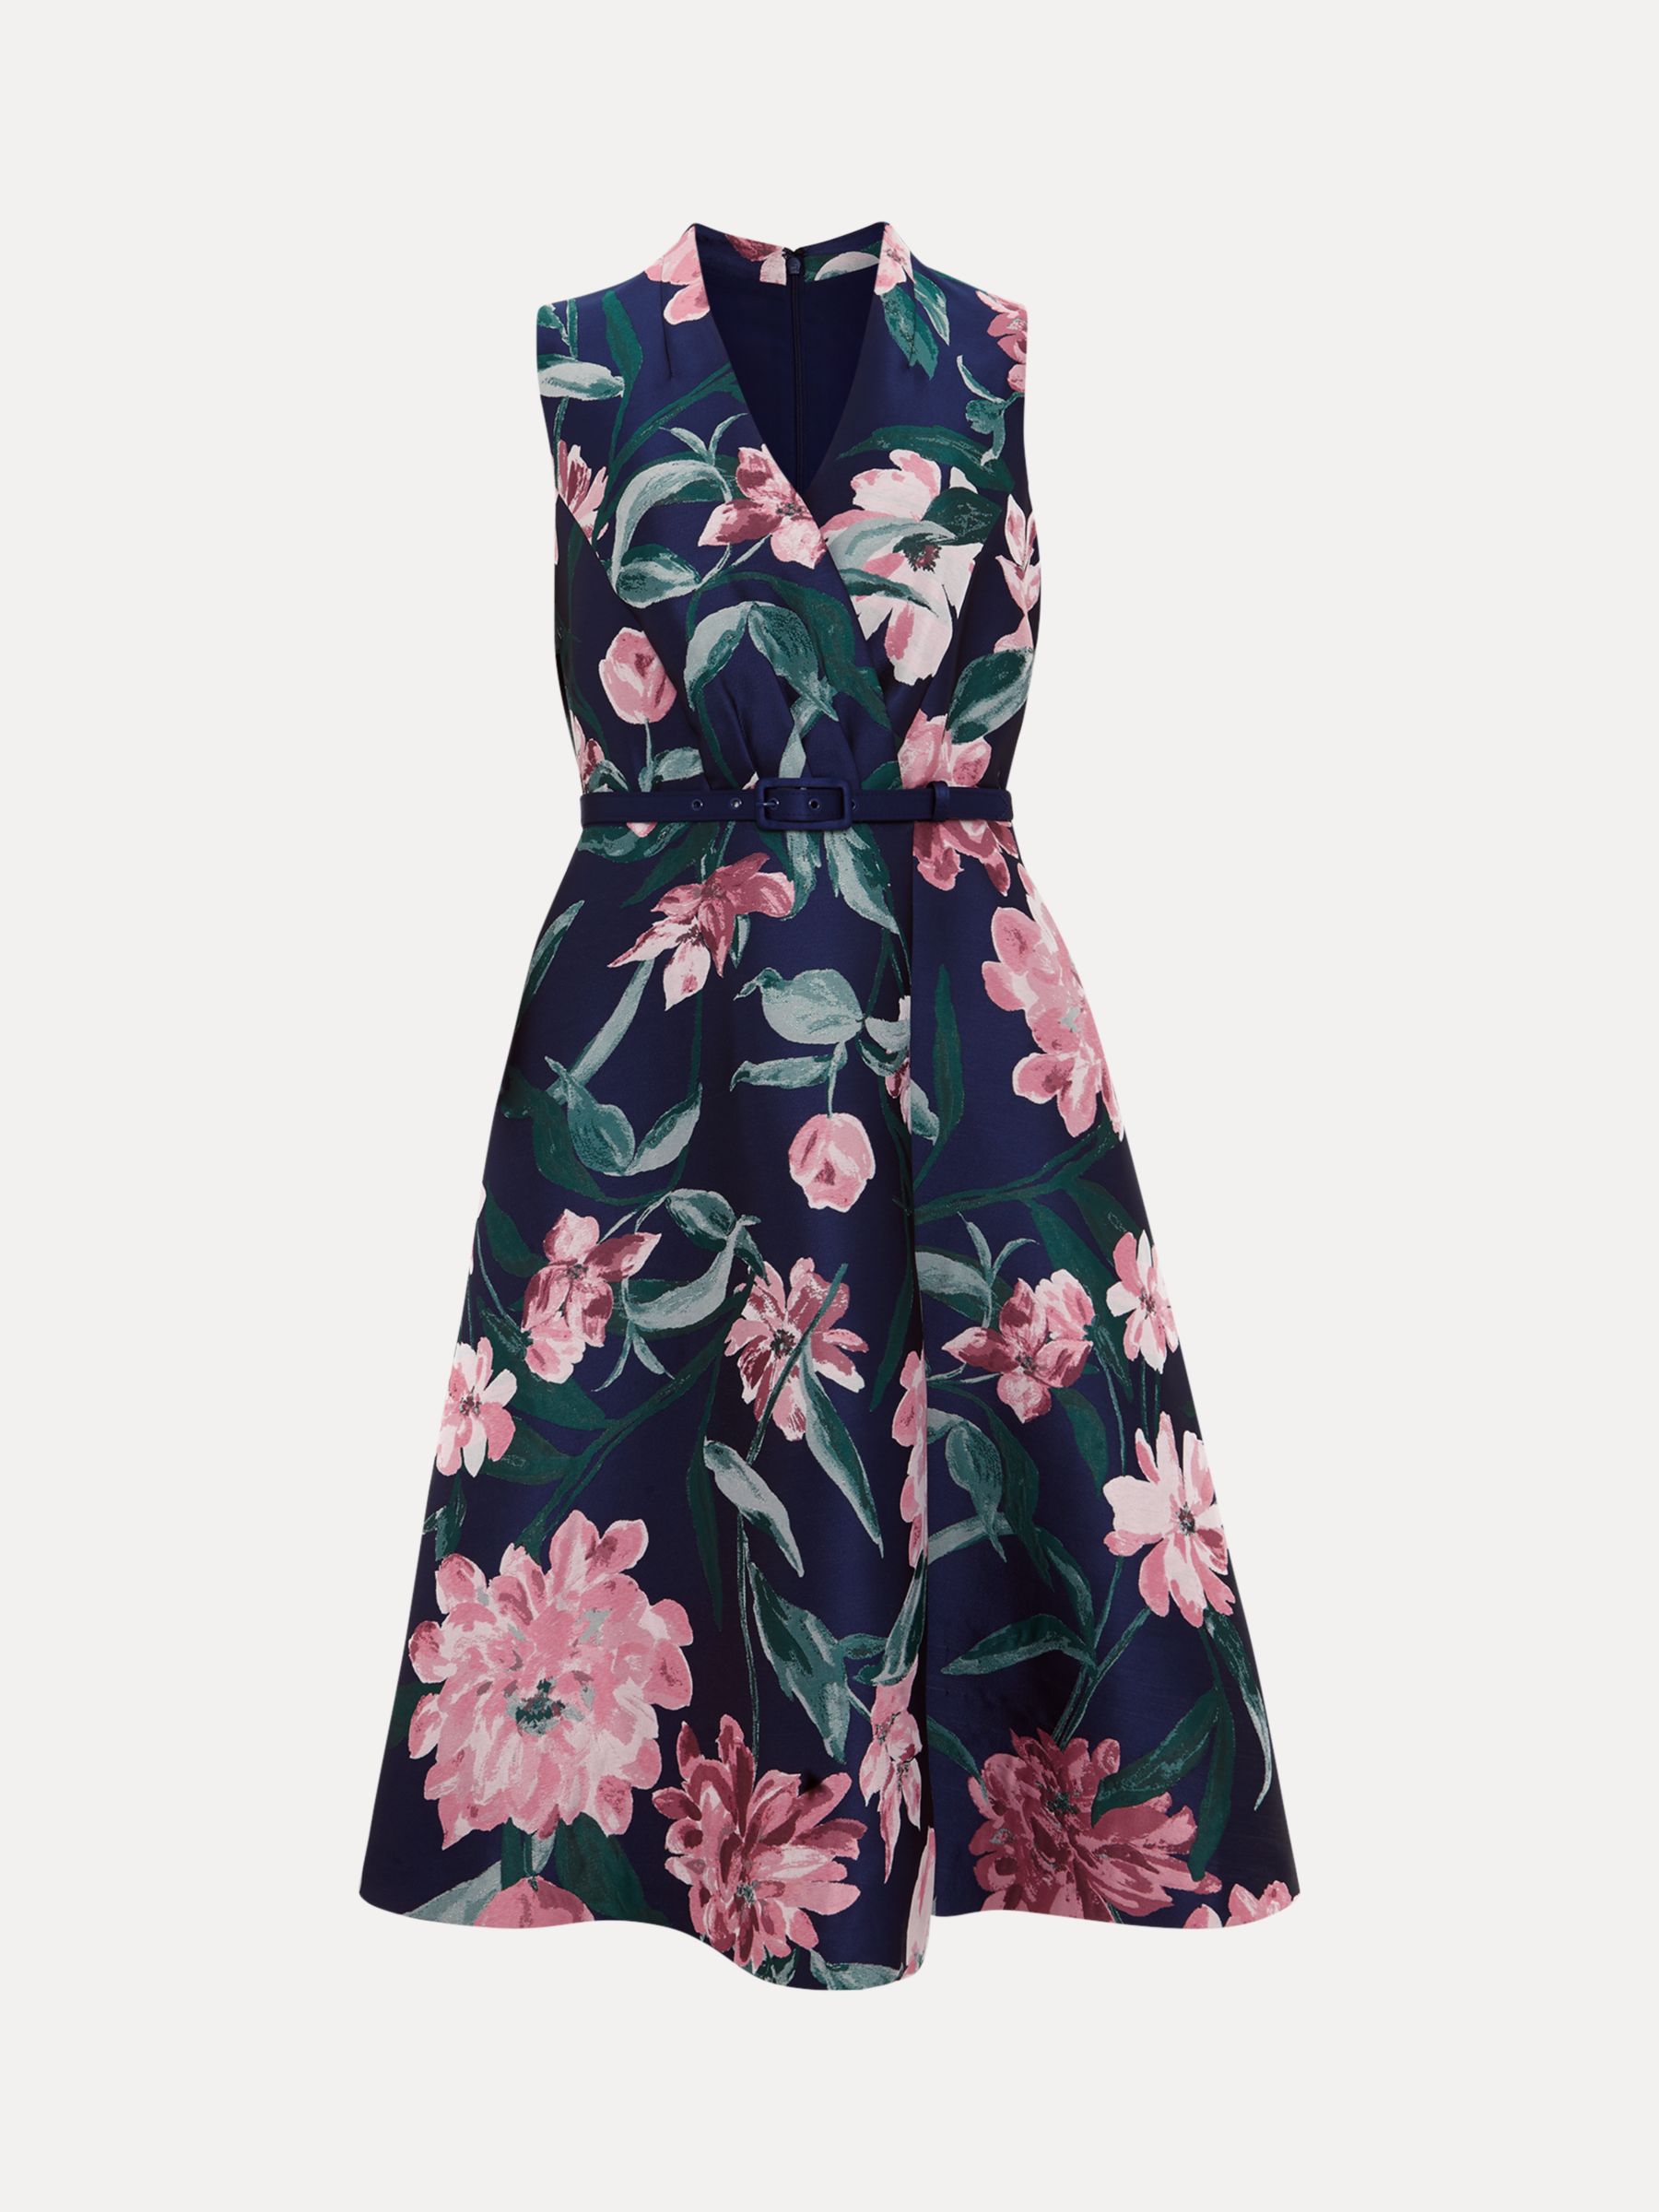 Phase Eight Salina Floral Jacquard Dress, Navy/Multi, 26